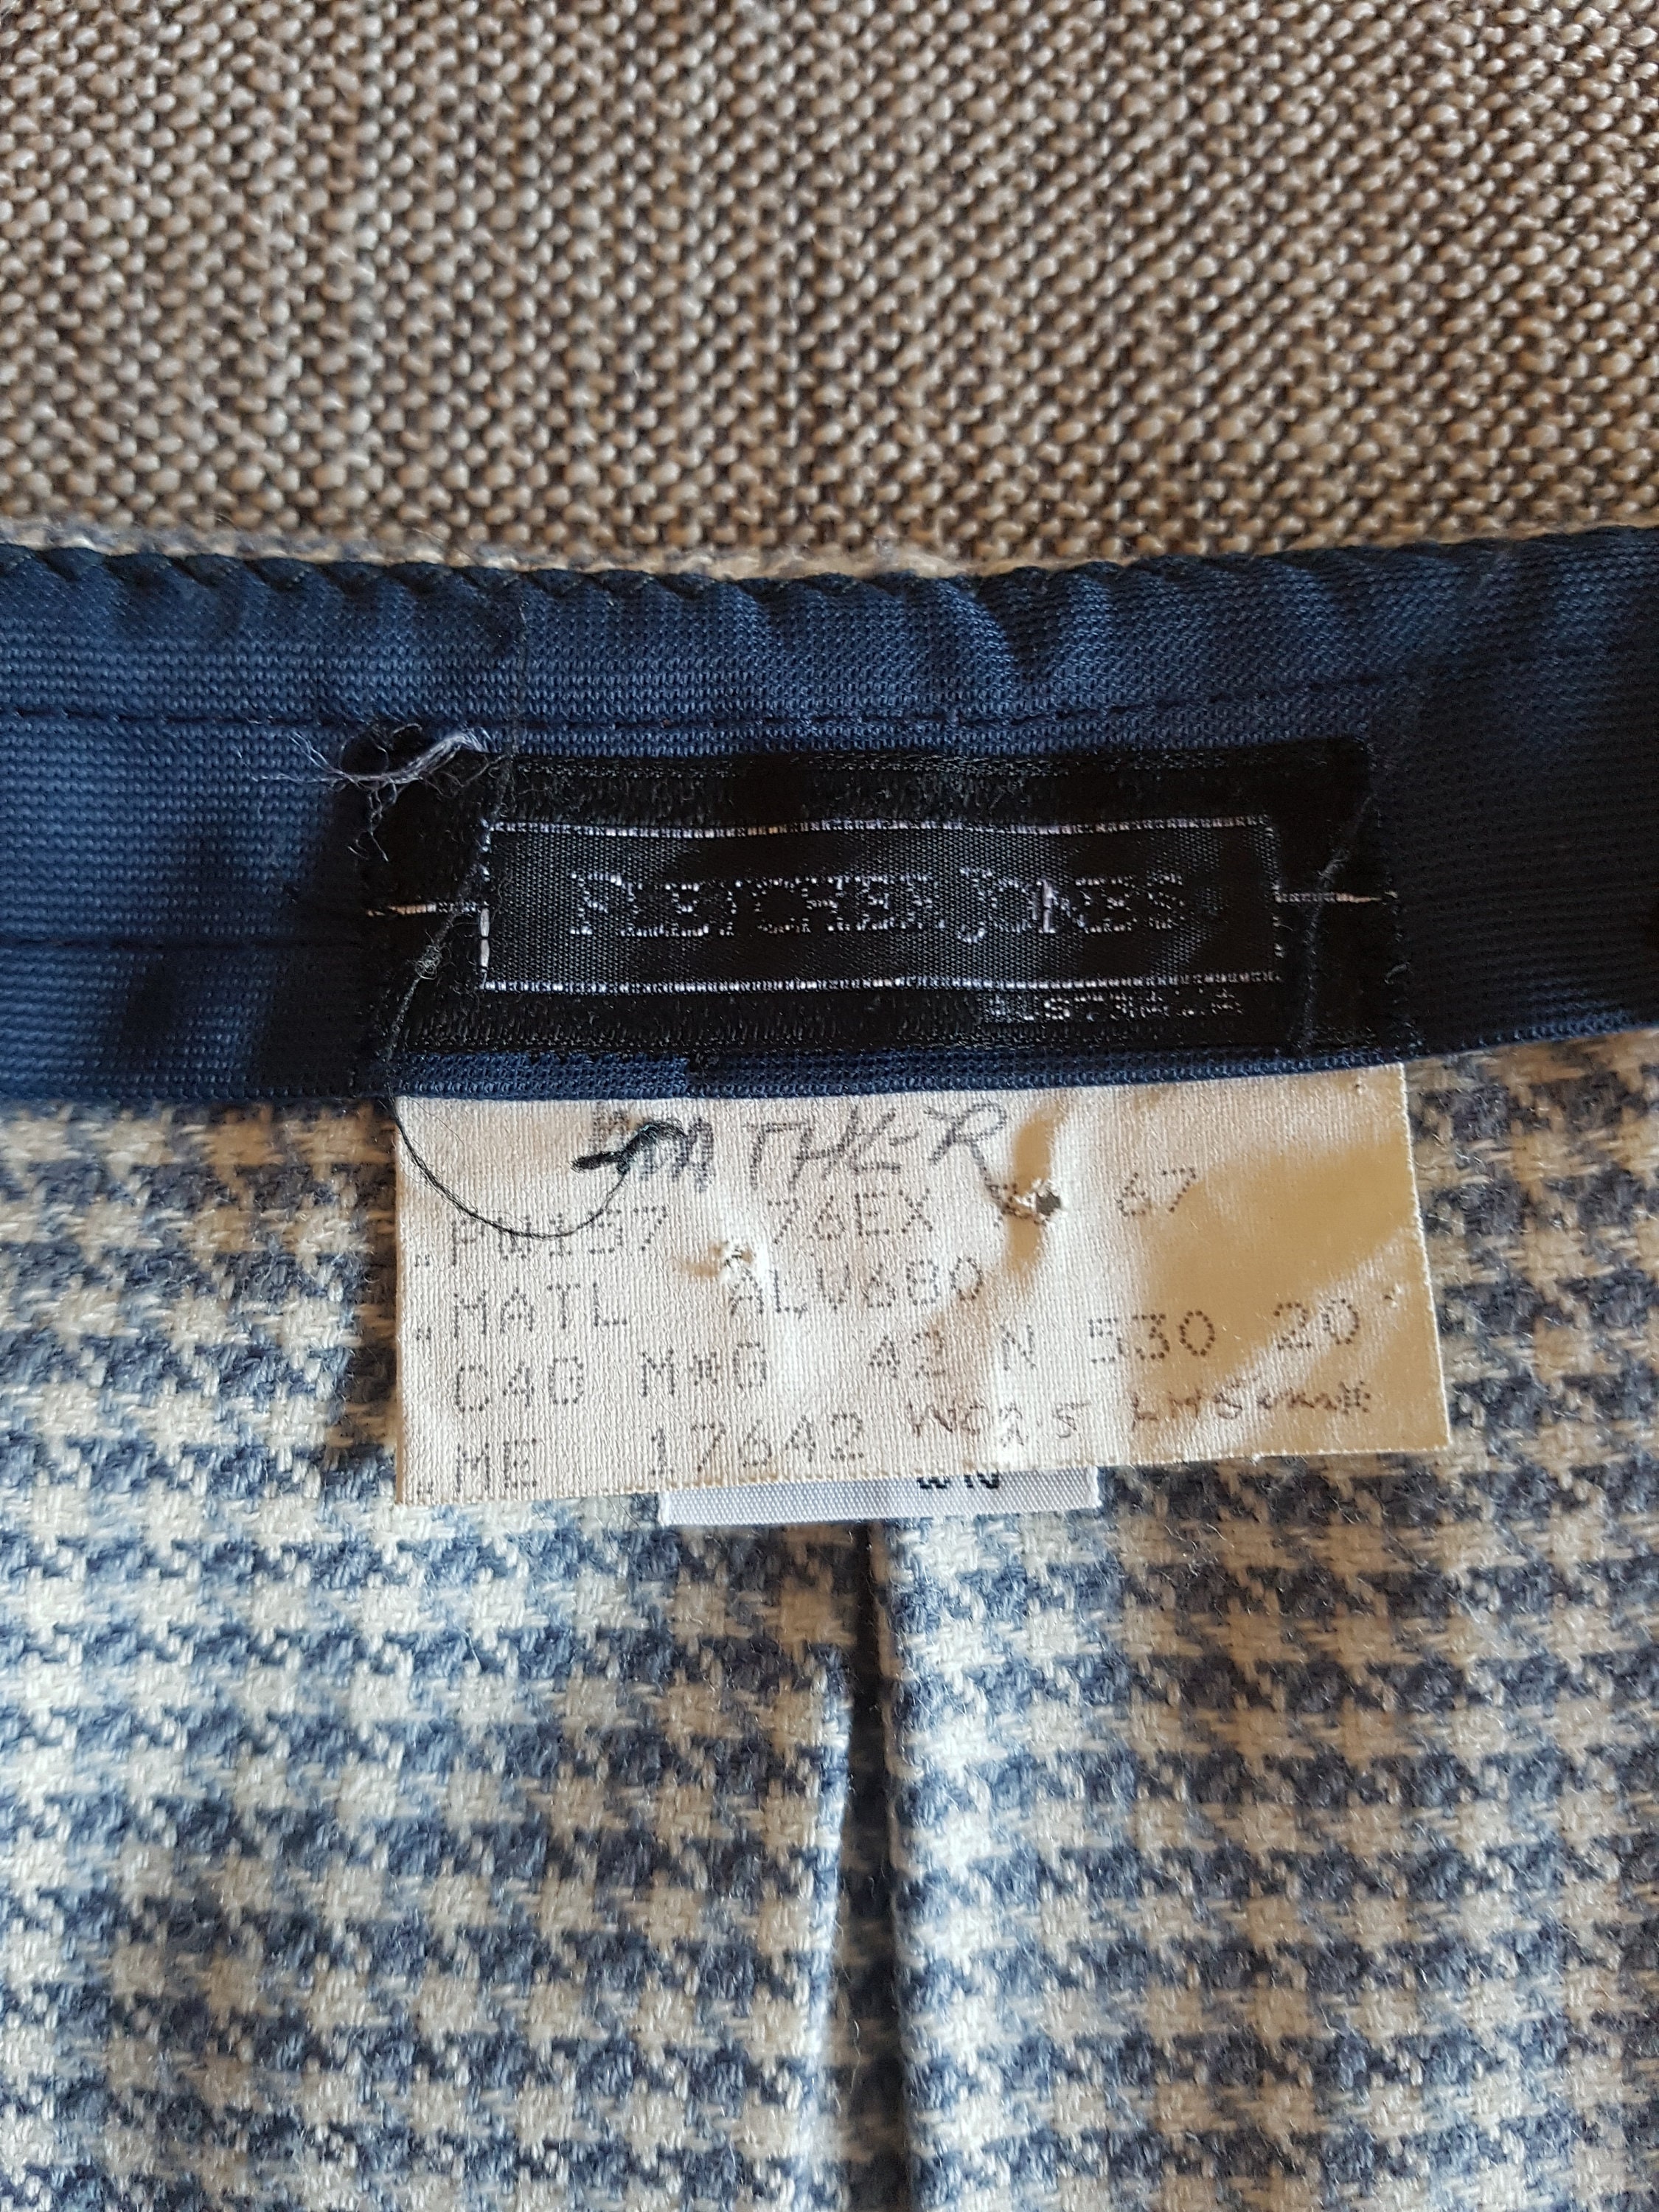 Beautifully Made Fletcher Jones Box Pleated Wool Blend Skirt - Etsy ...